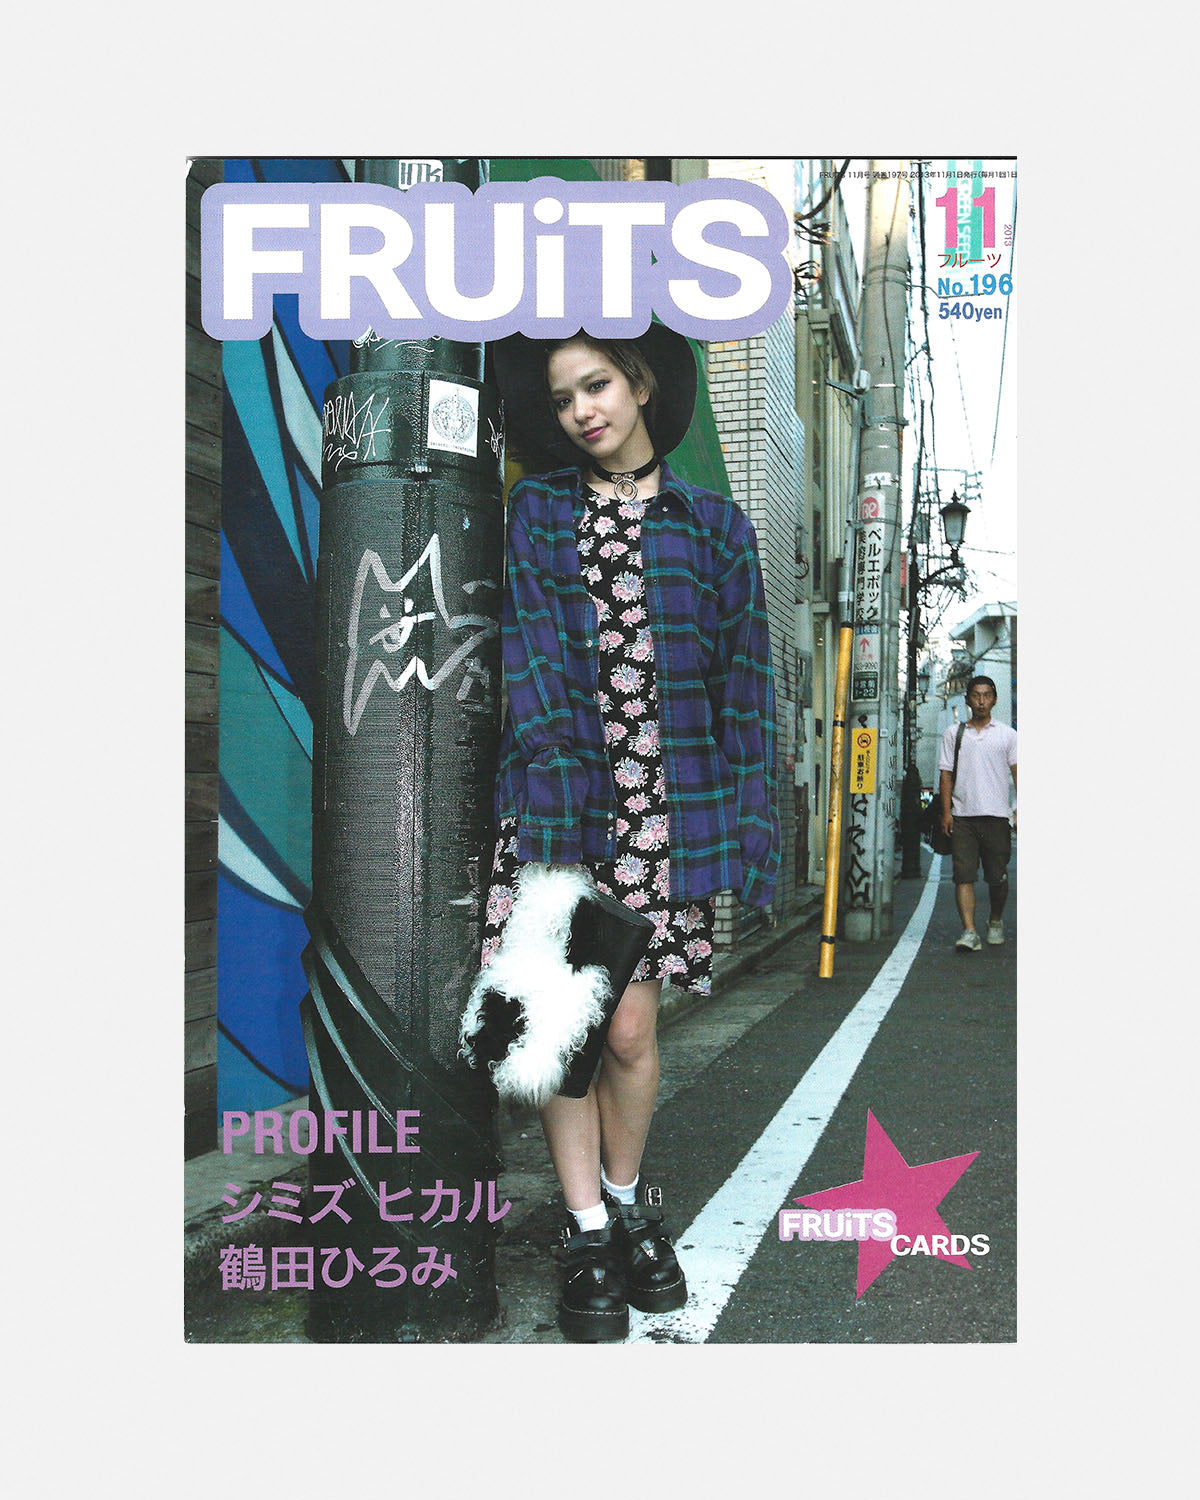 Fruits Magazine November 2013 (#196)